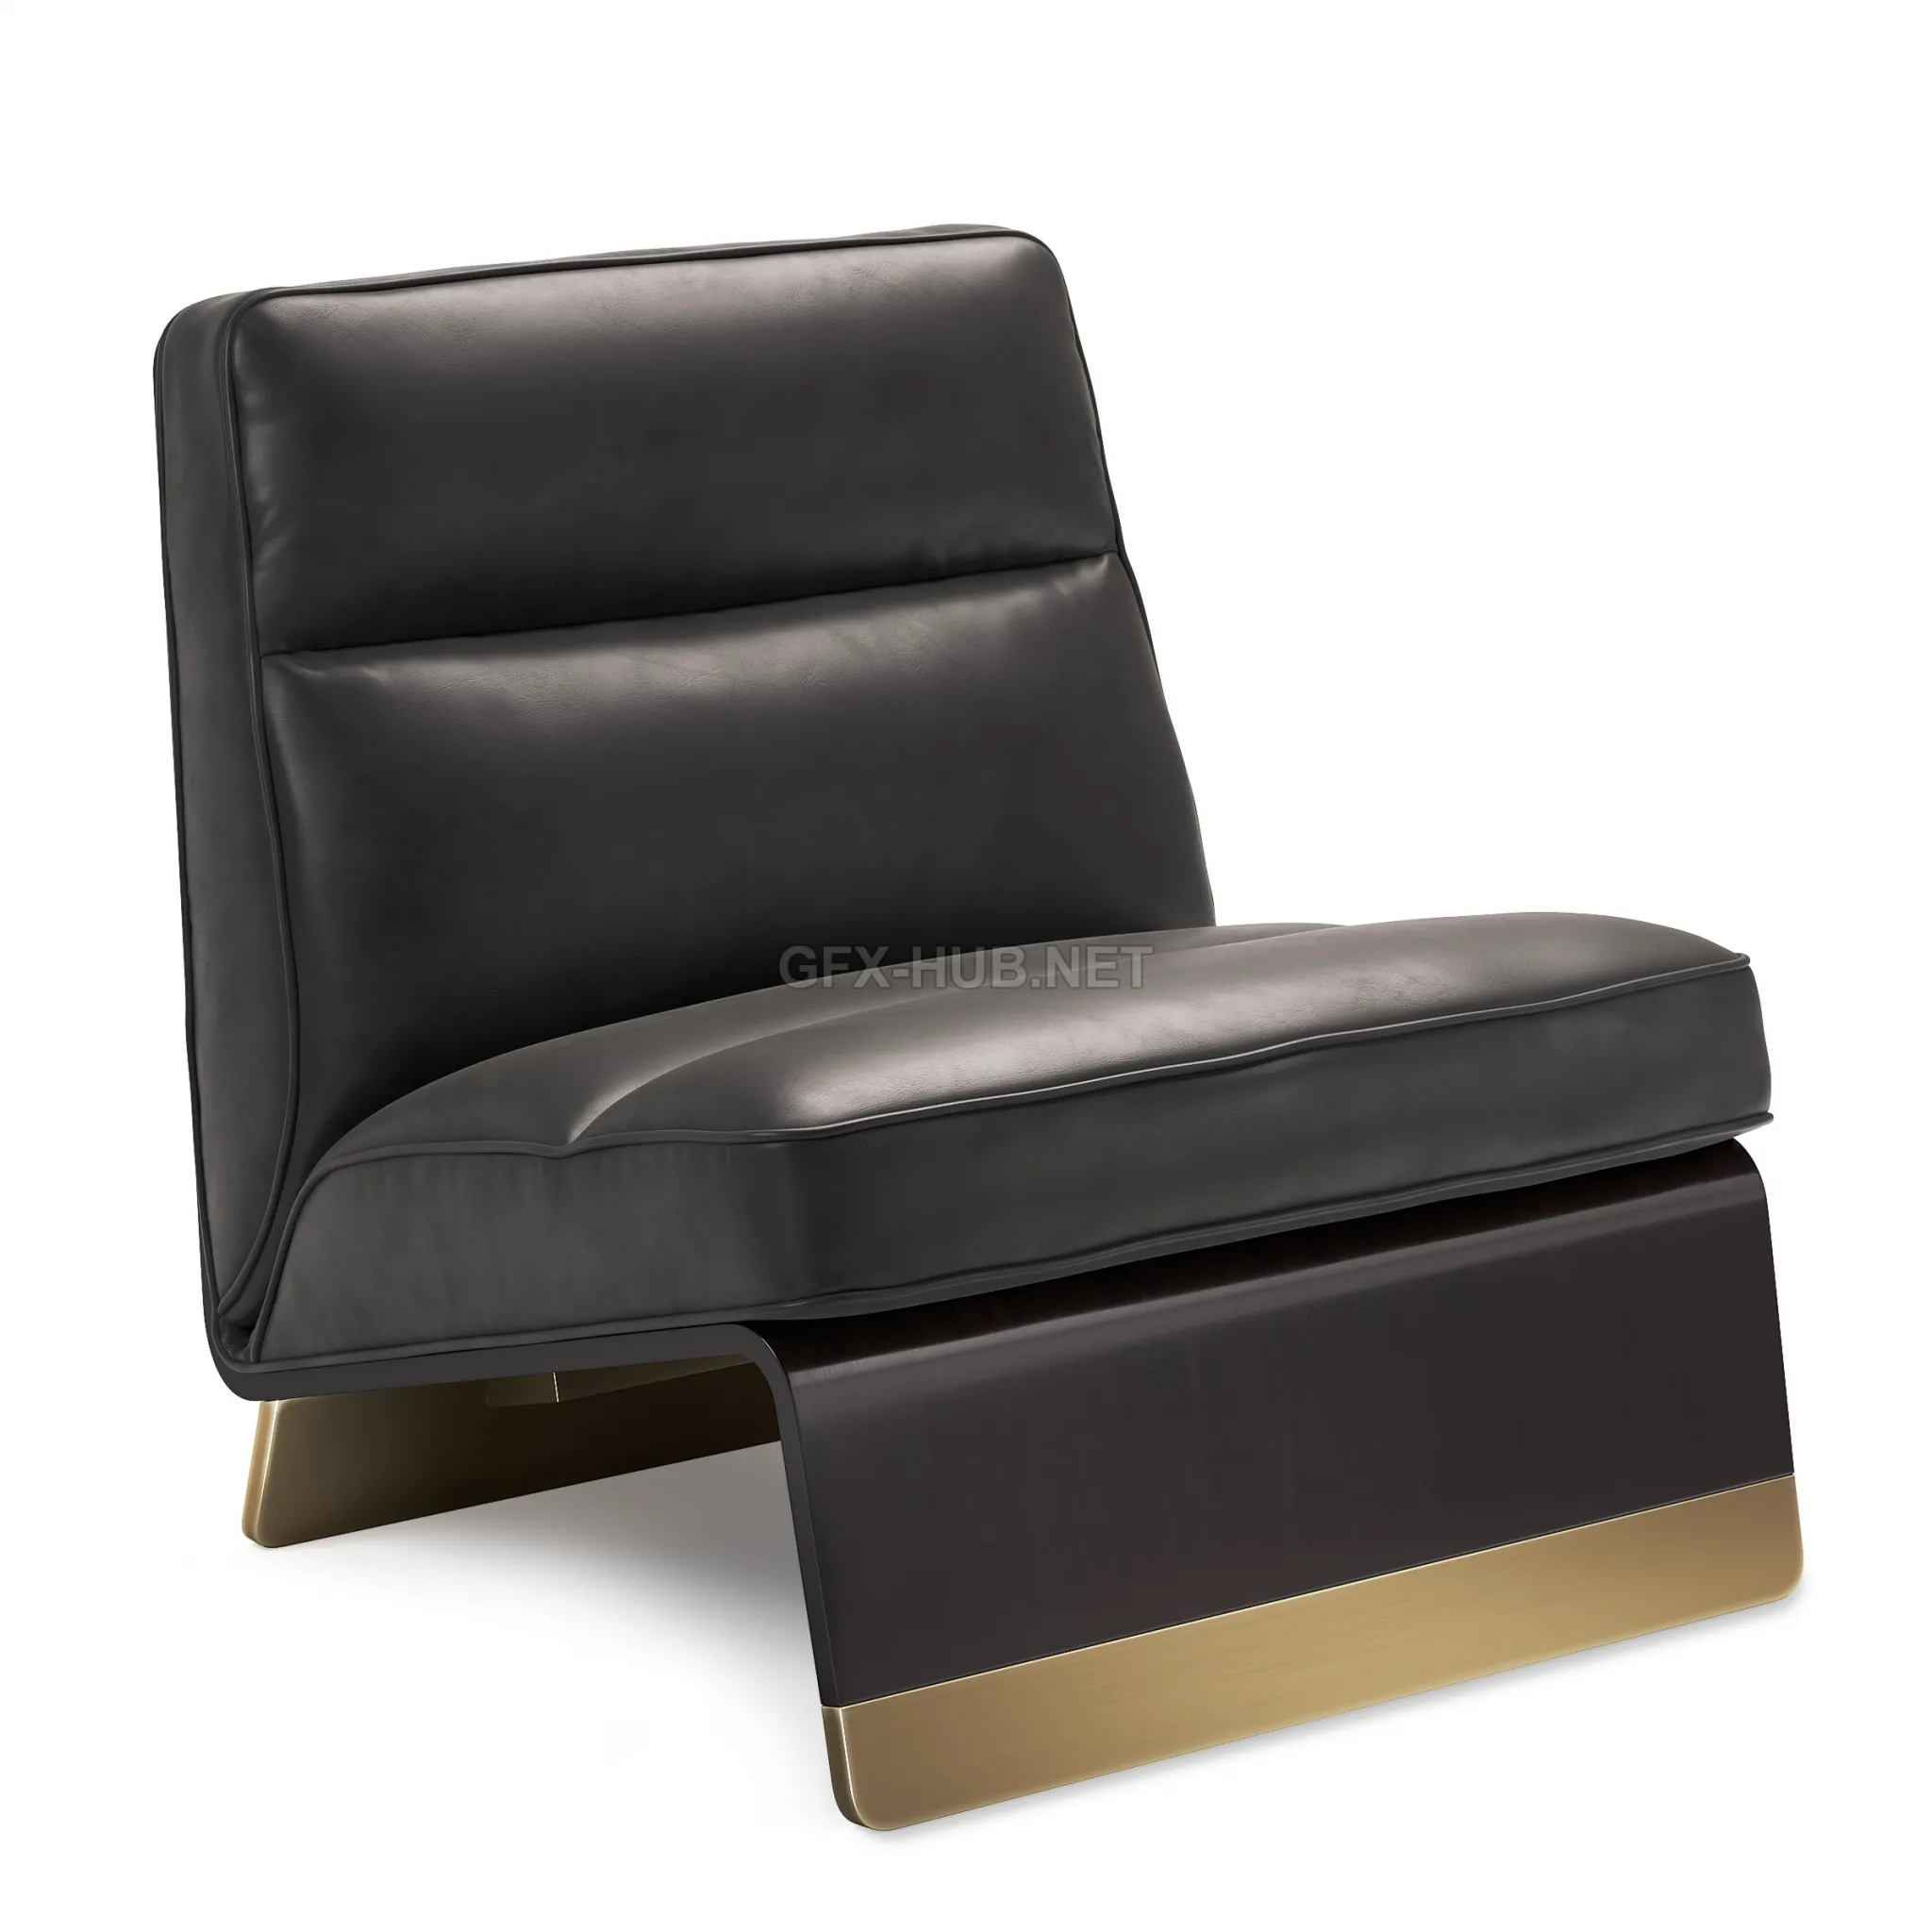 Chair Baxter Greta 3D MODEL – 209987